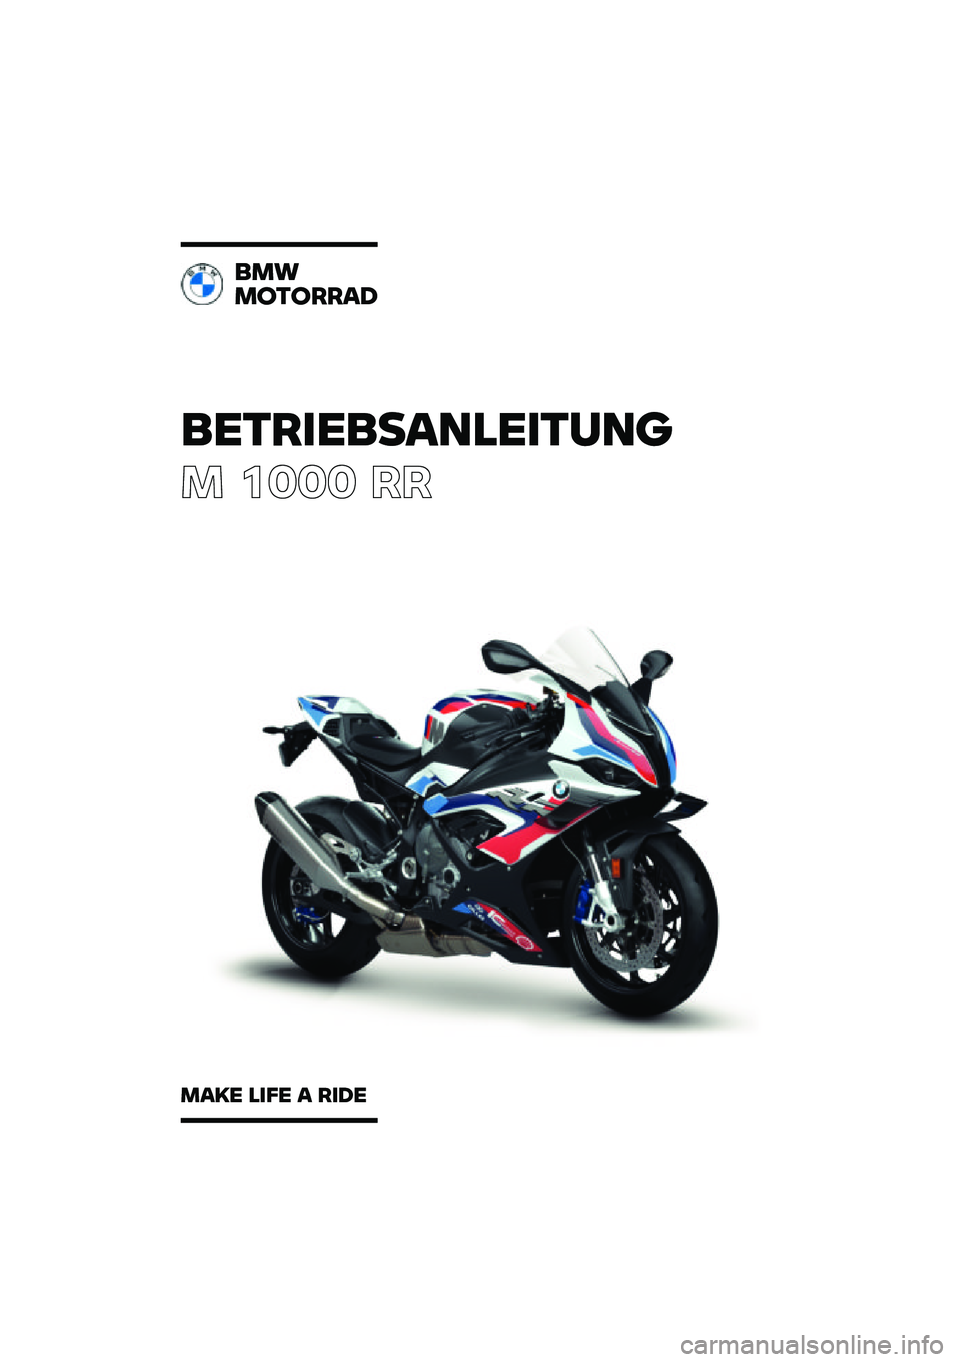 BMW MOTORRAD M 1000 RR 2021  Betriebsanleitung (in German) ���������\b�	�
�����	�\f
� ���� ��
��
�
�
������\b�
�
�\b�� �
��� �\b ���� 